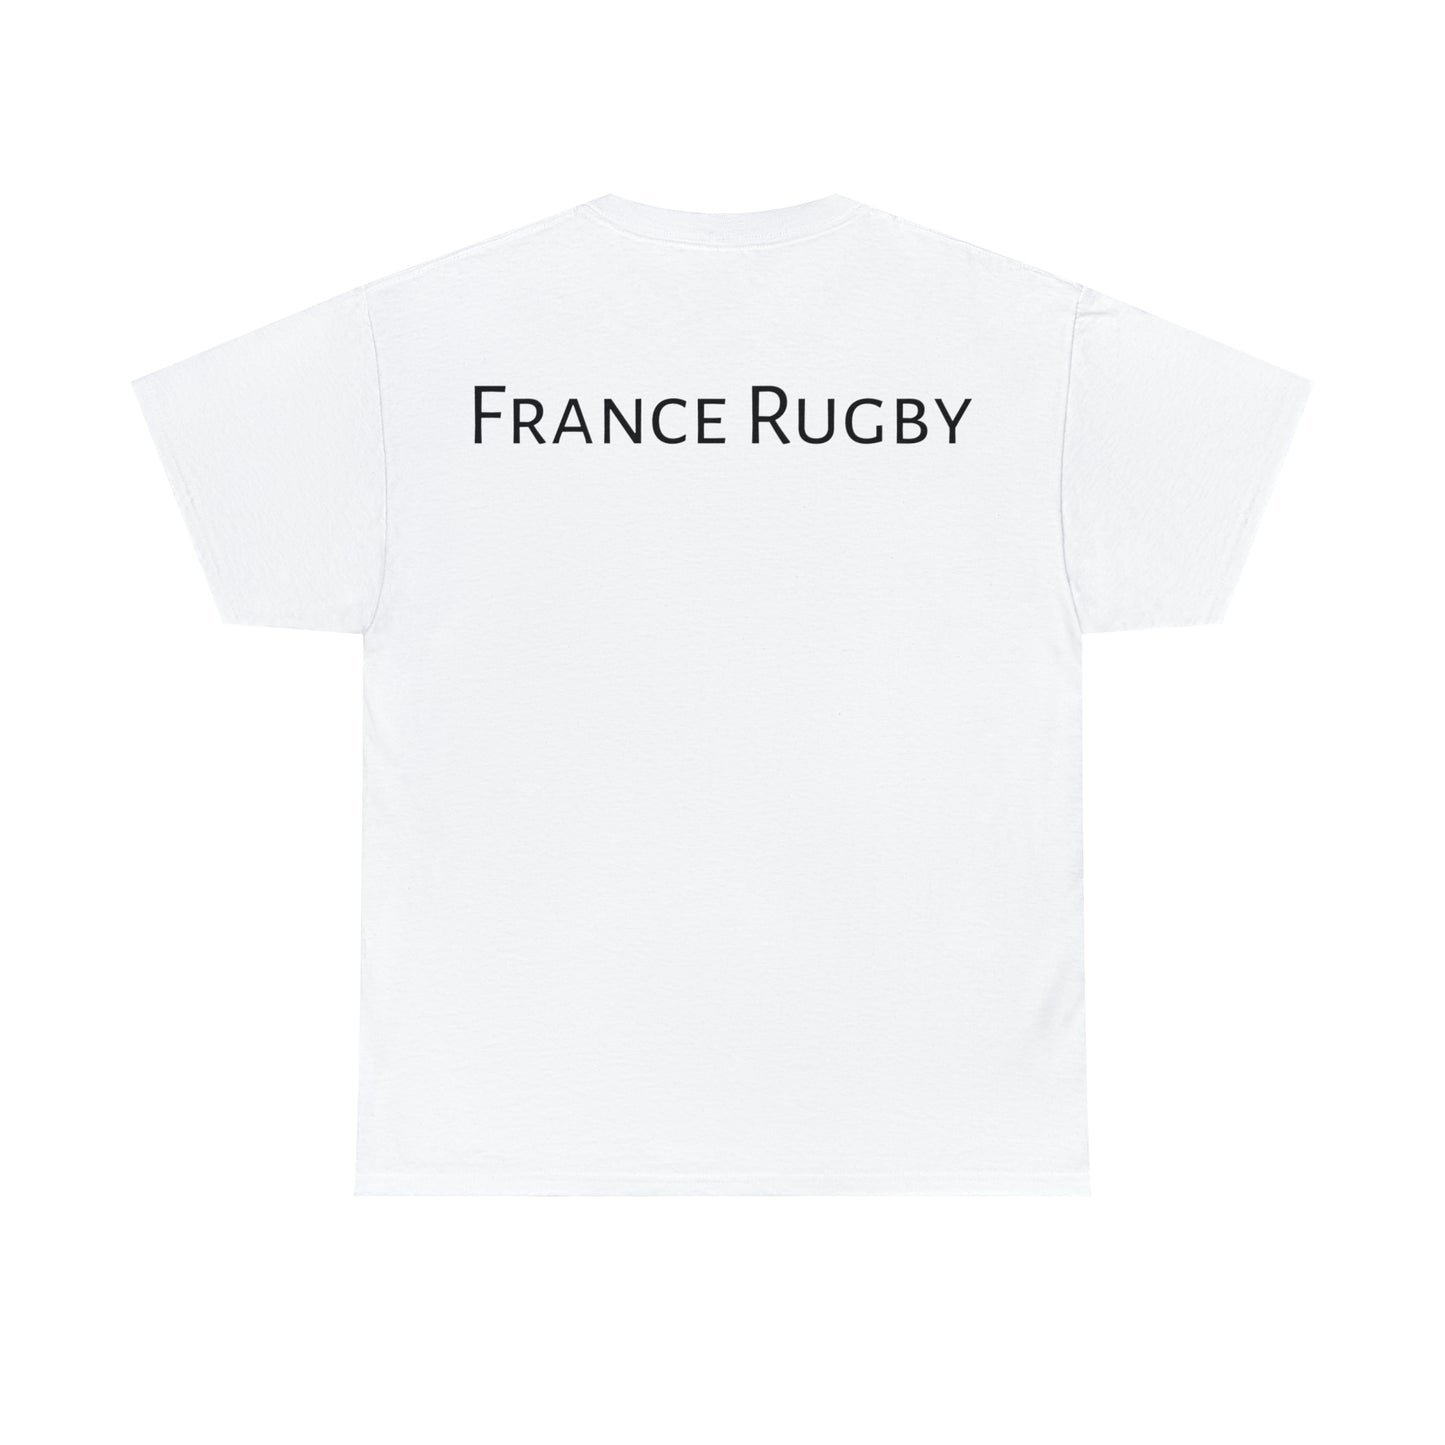 France Winning RWC 2023 - light shirts